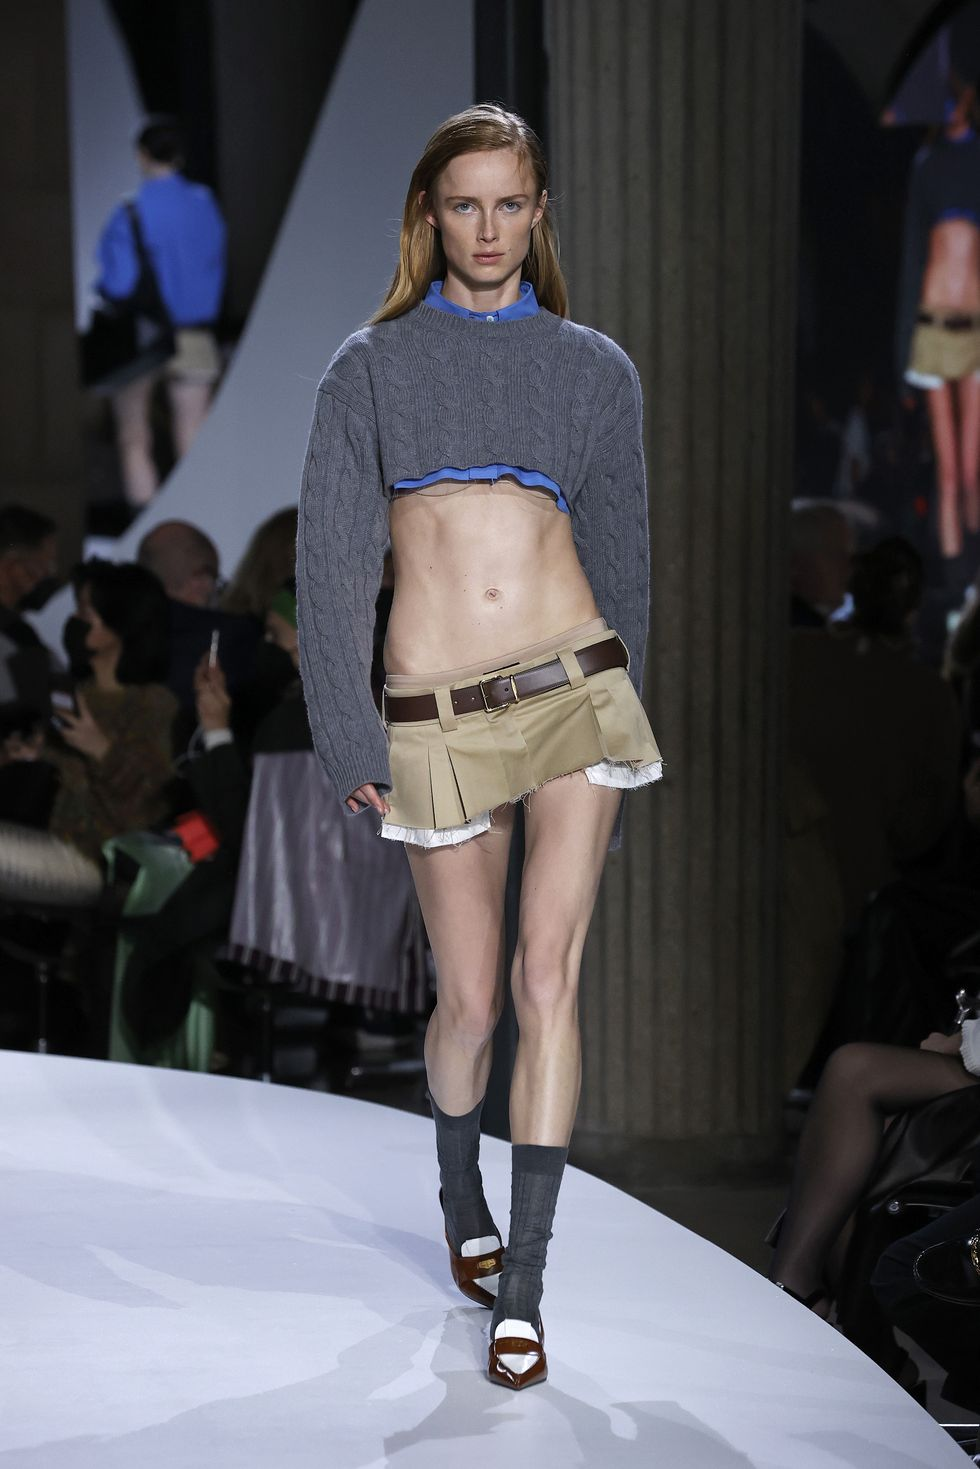 mode;l wearing crop top sweater on micro mini skirt on the catwalk